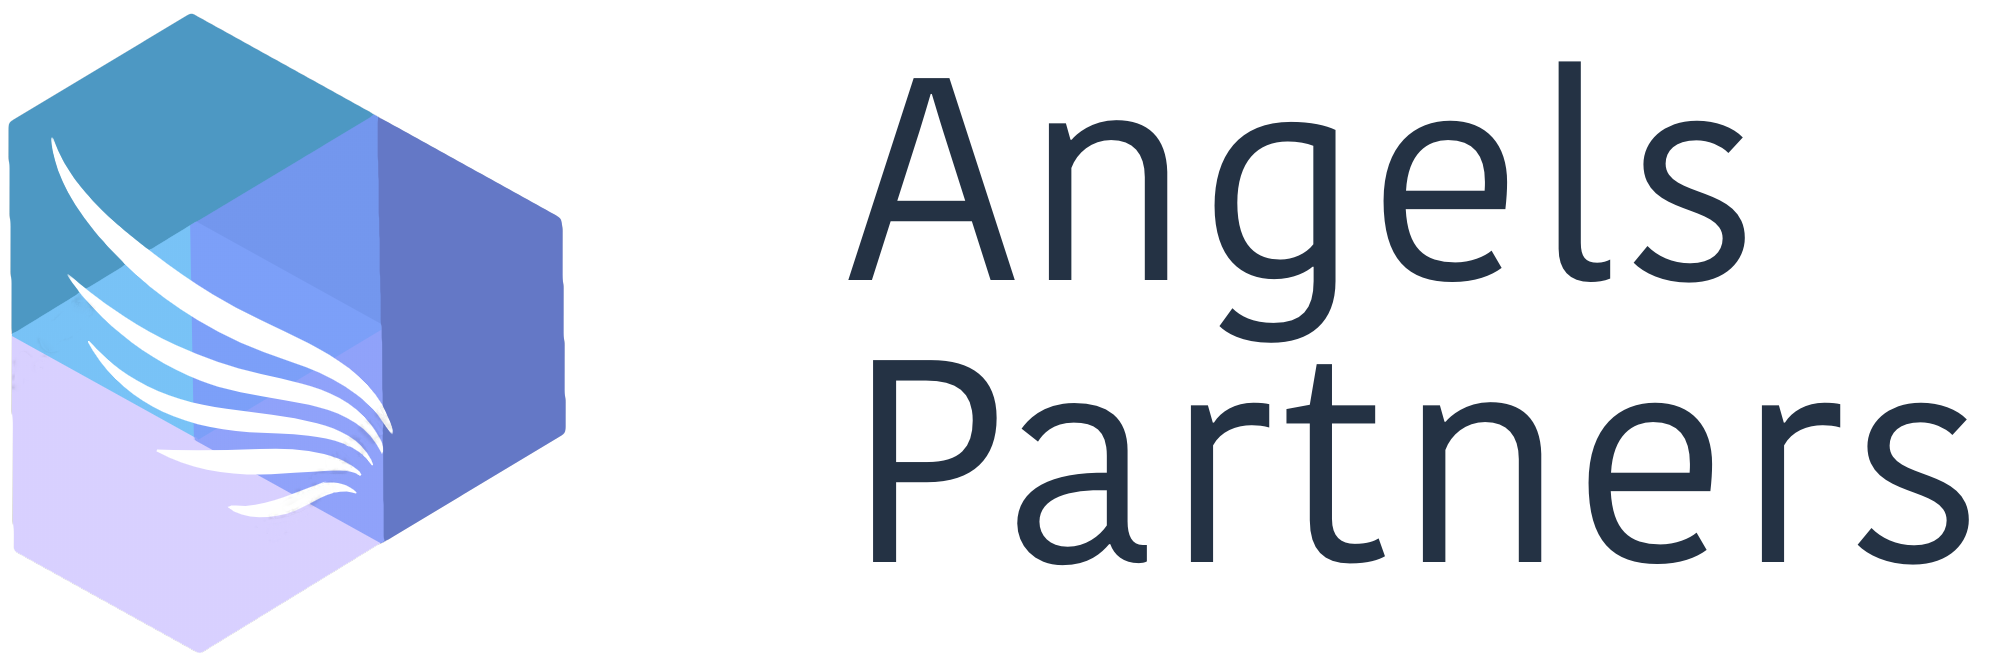 Angels Partners Logo Black